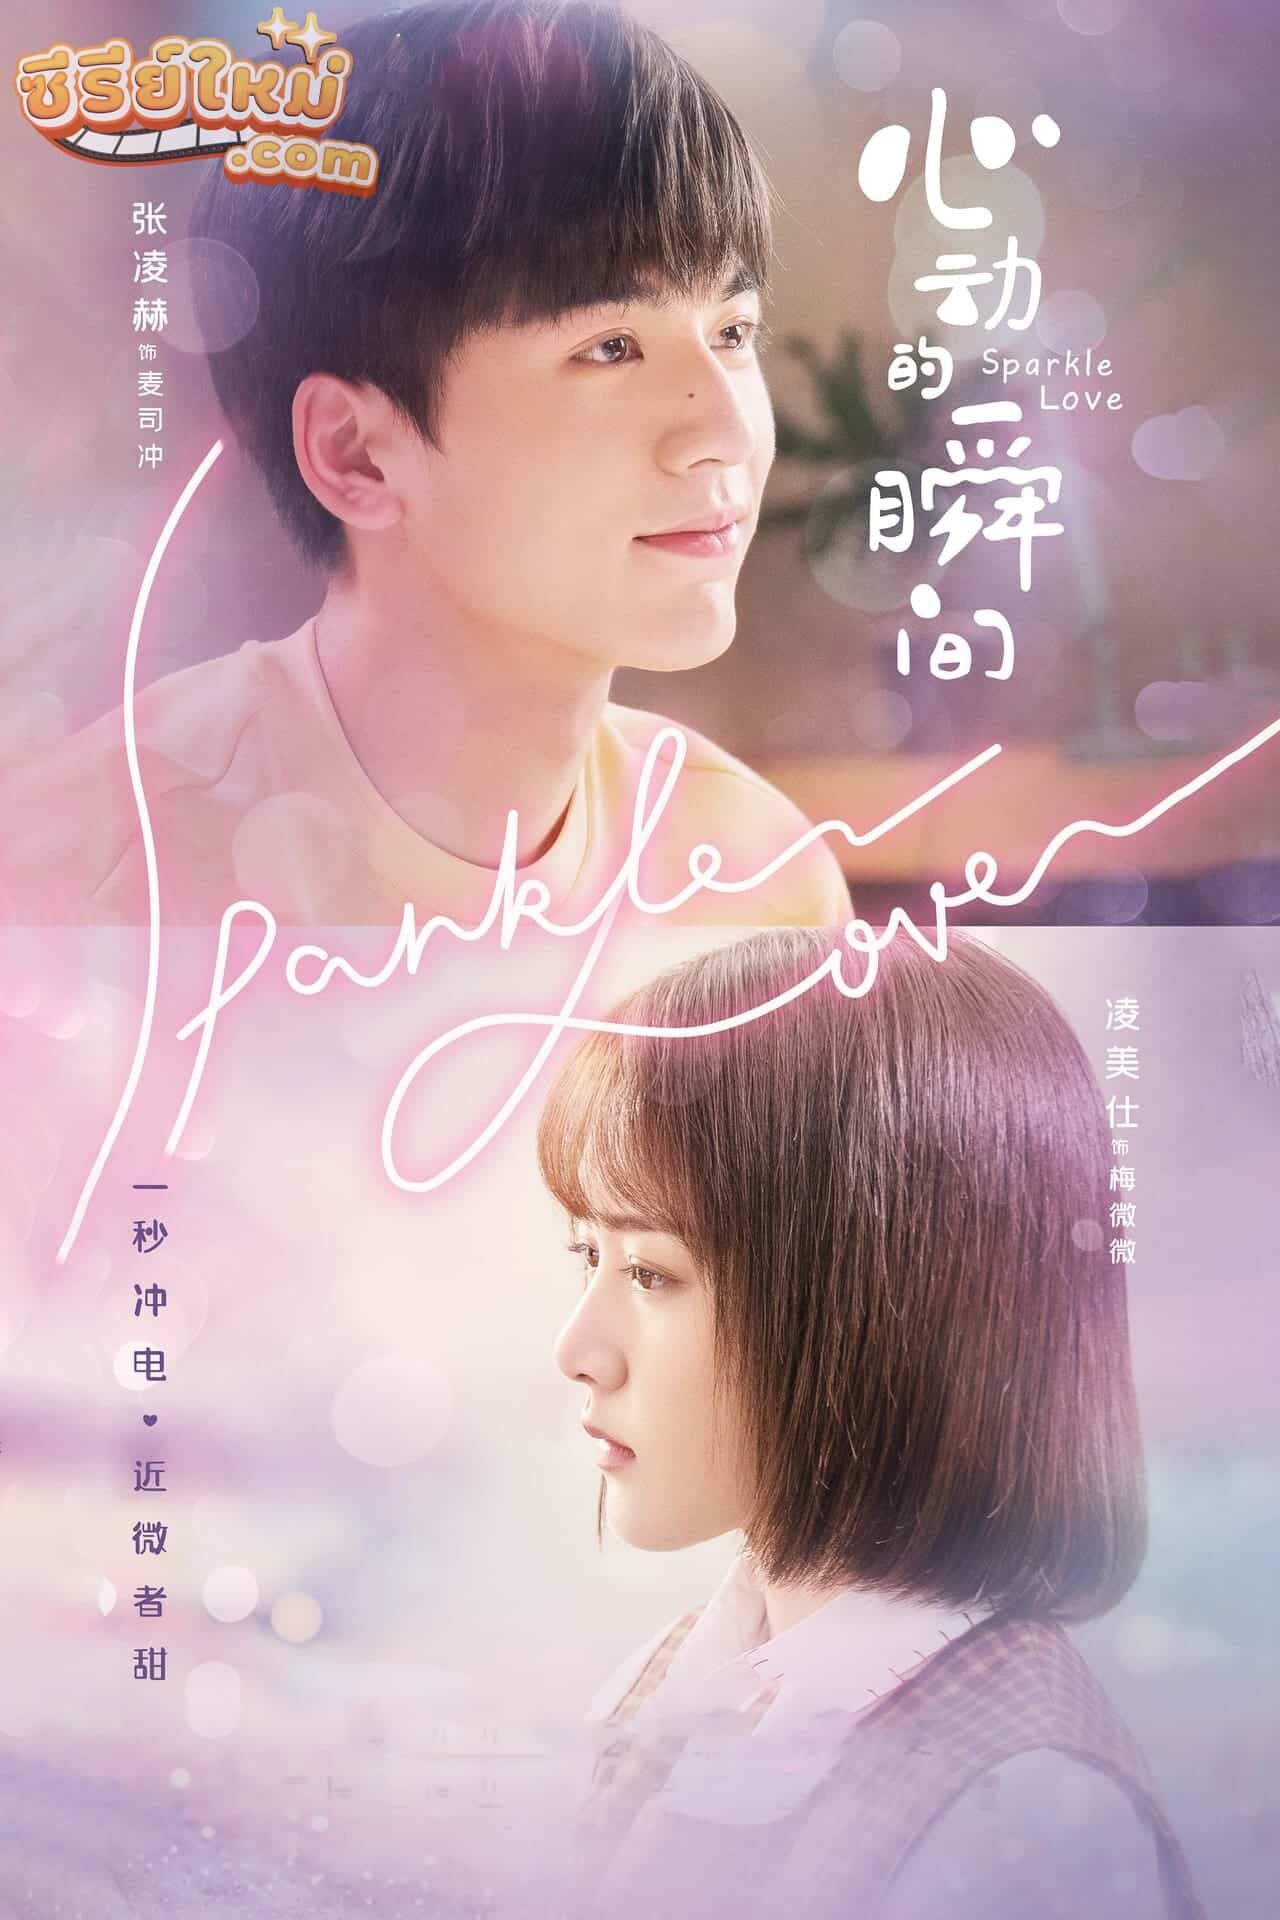 Sparkle Love จังหวะหัวใจสปาร์ครัก (2020)